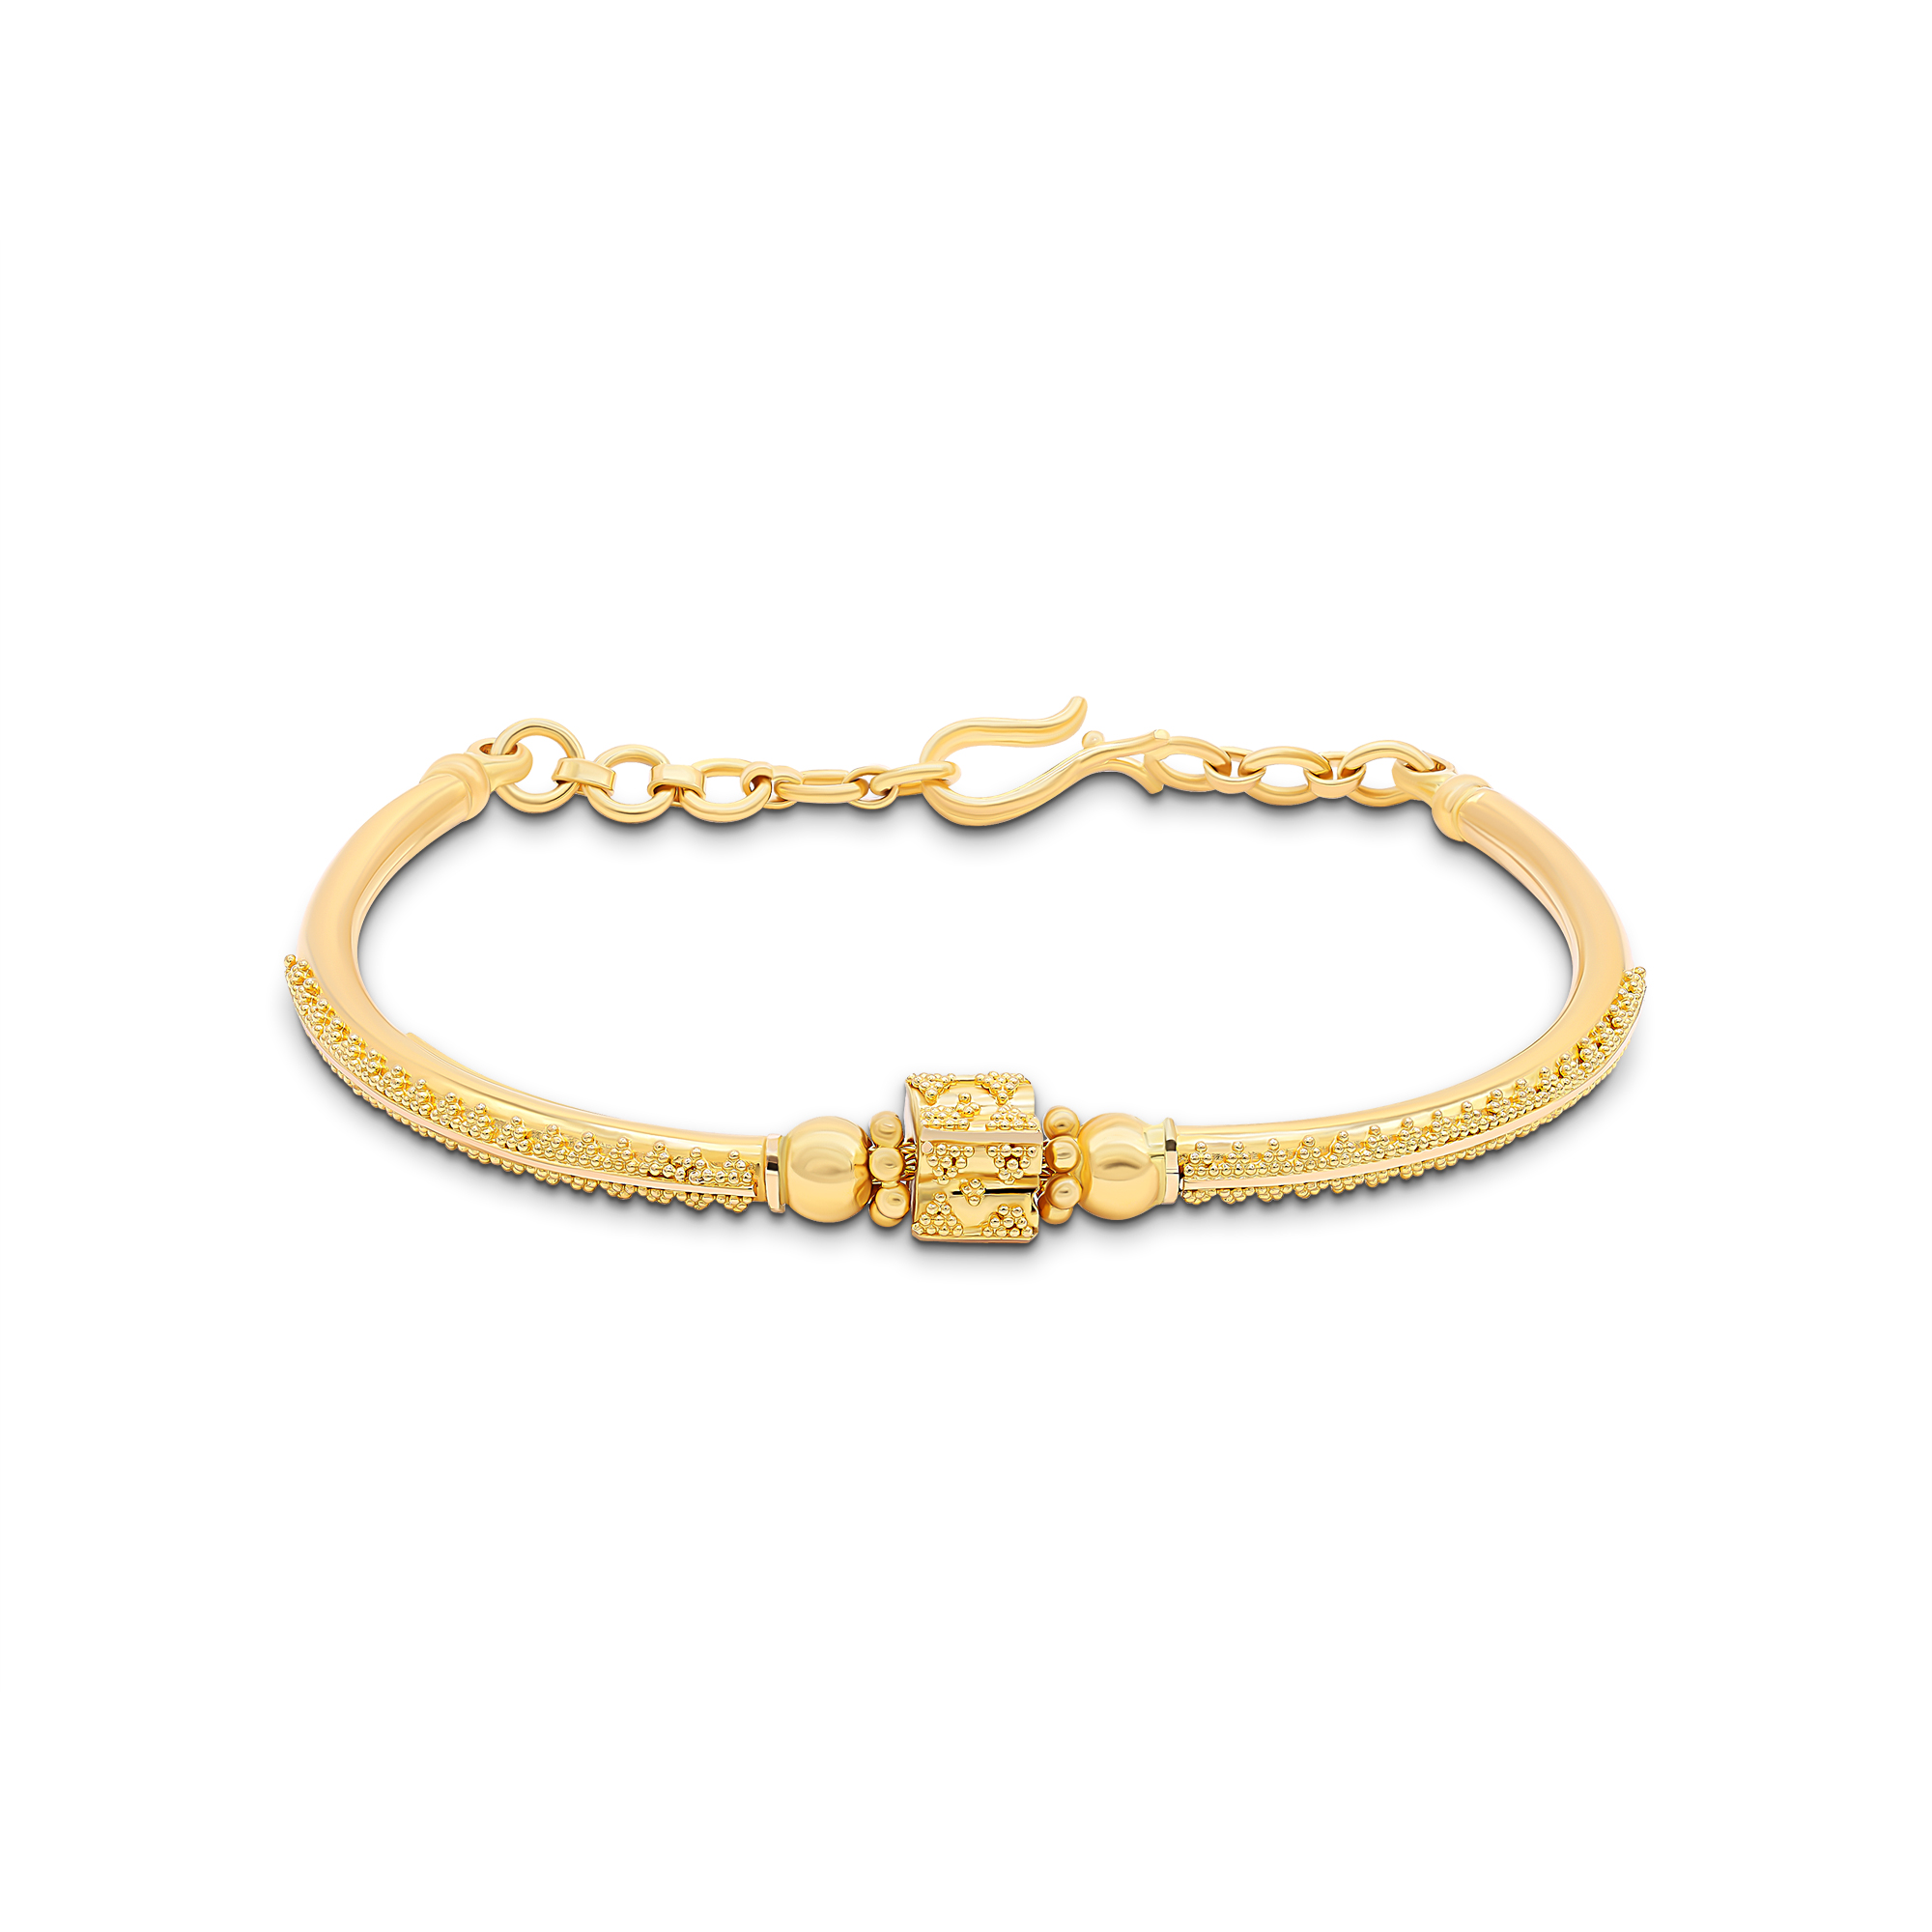 Mushroom Gold Bracelet - Shawn Paul Jewelry